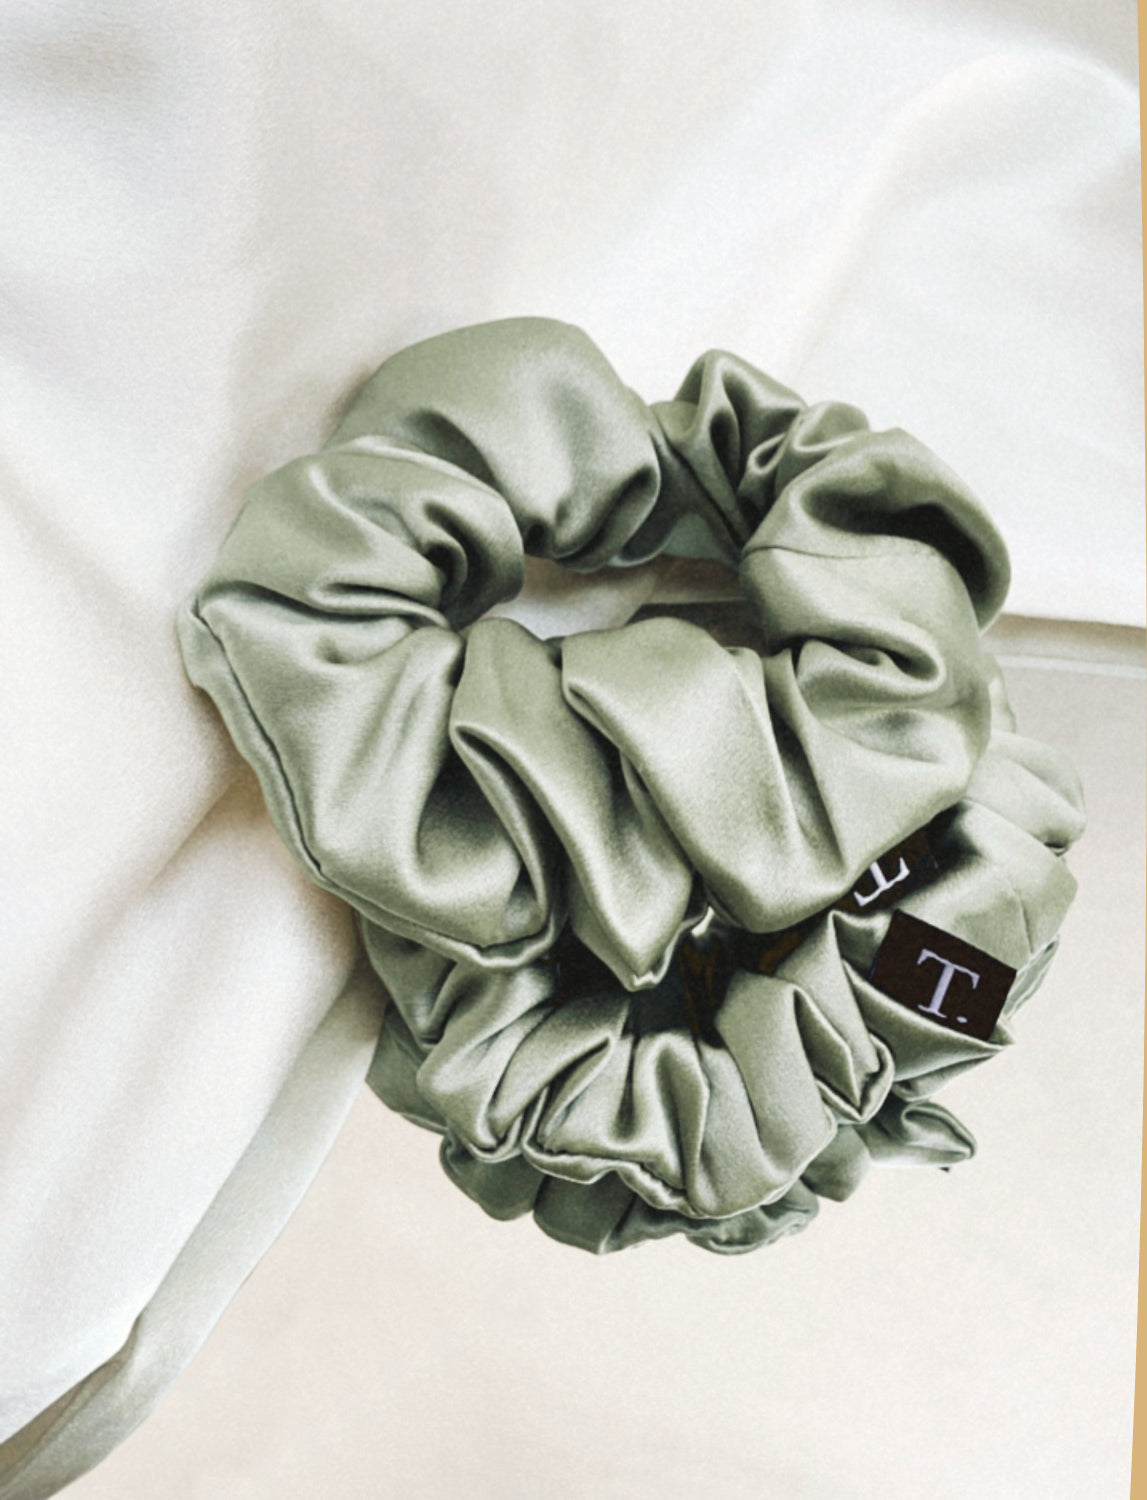 Tender Objects silk scrunchie in Natural Sage